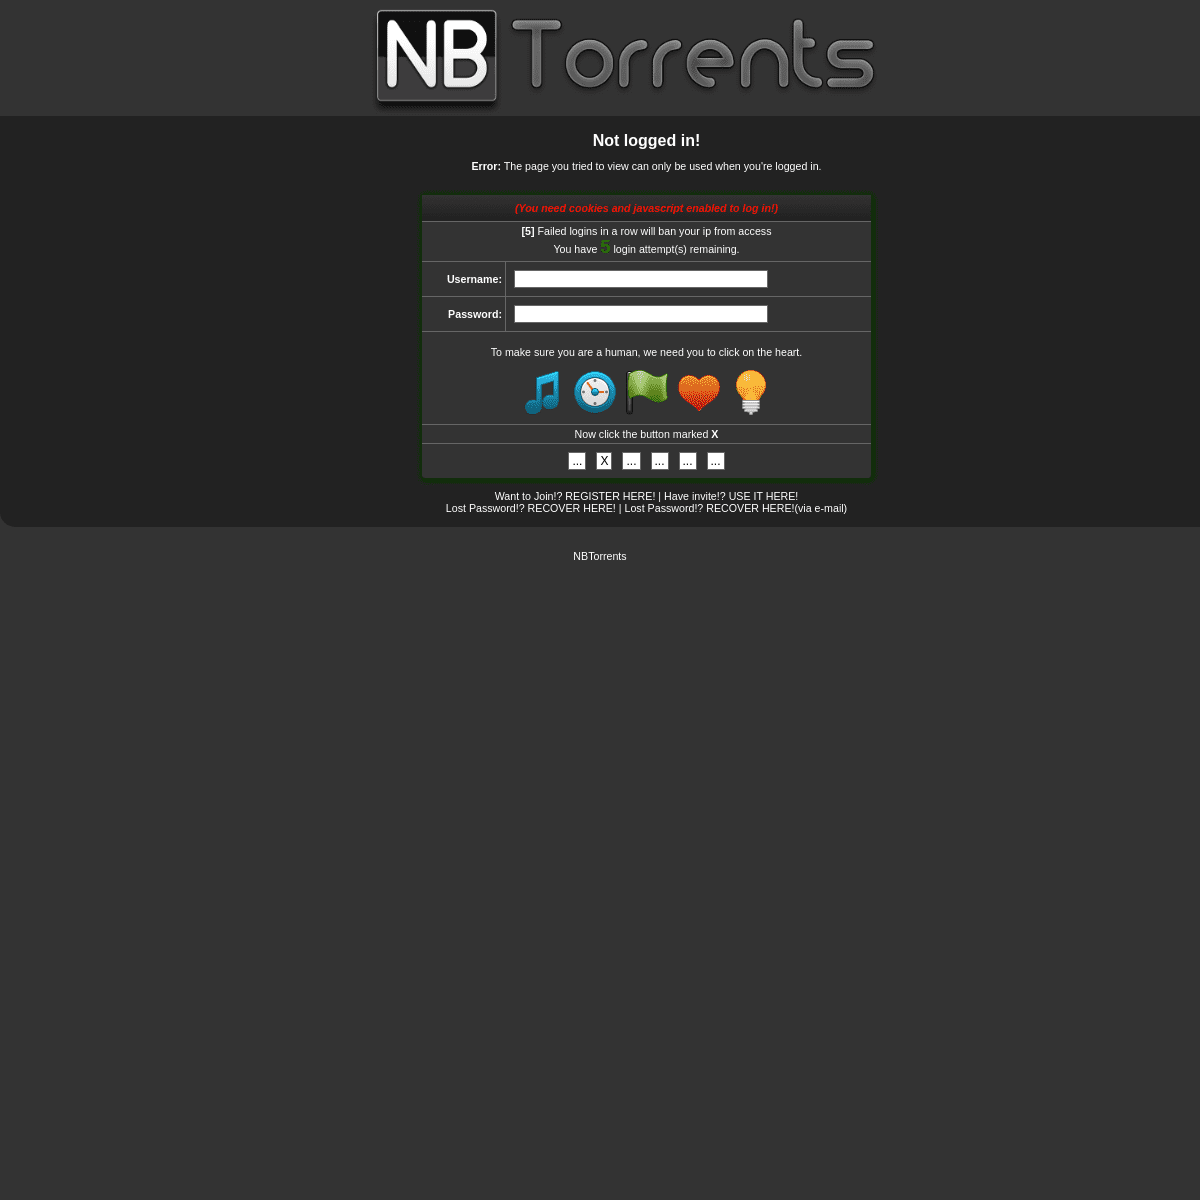 A complete backup of nbtorrents.com